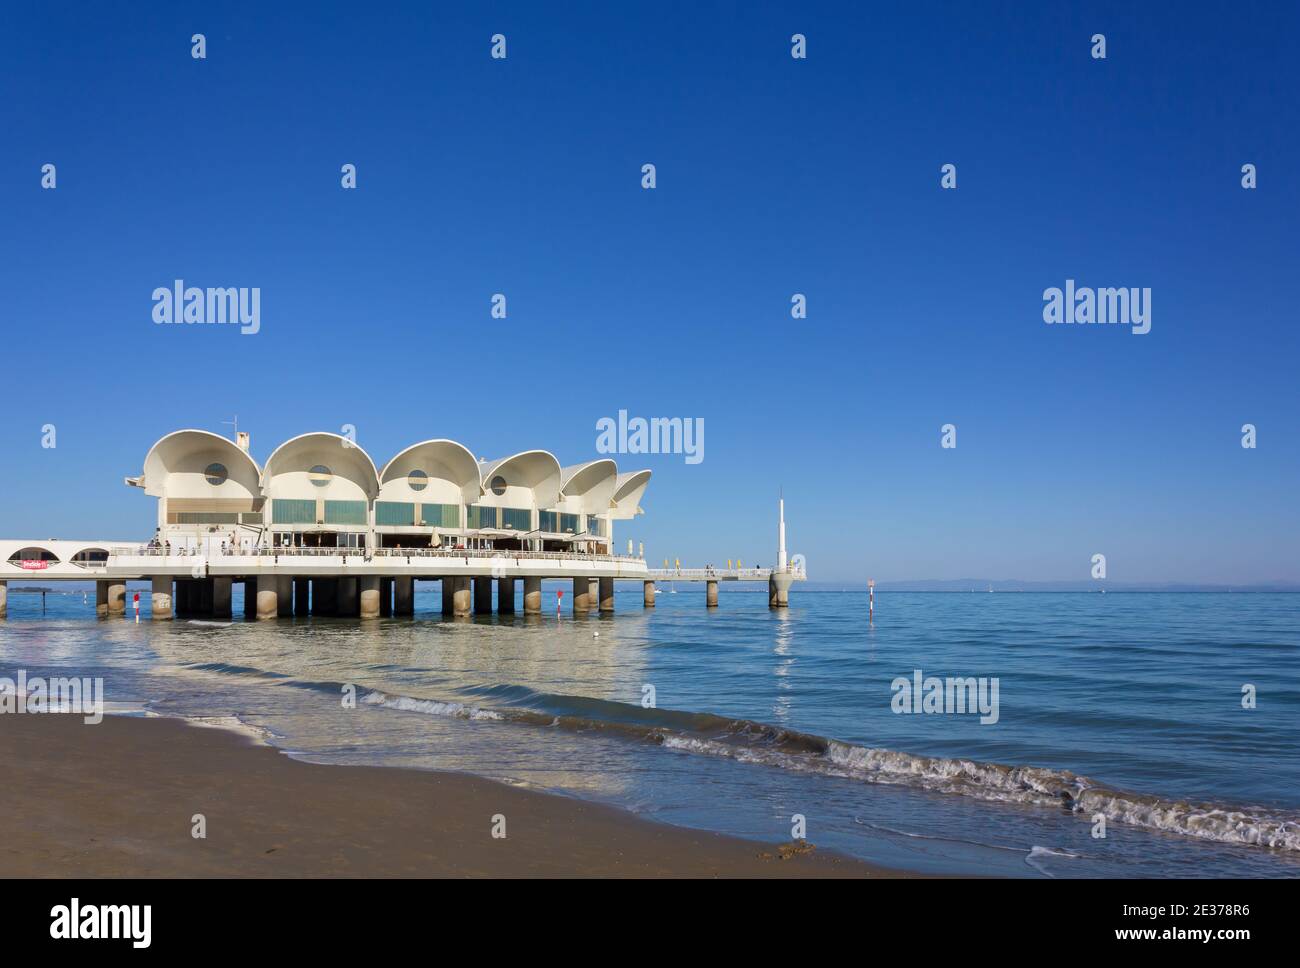 LIGNANO SABBIADORO, Italy - September 30, 2018: The famous sea-facing terrace on the beach, symbol of Lignano Sabbiadoro seaside resort Stock Photo